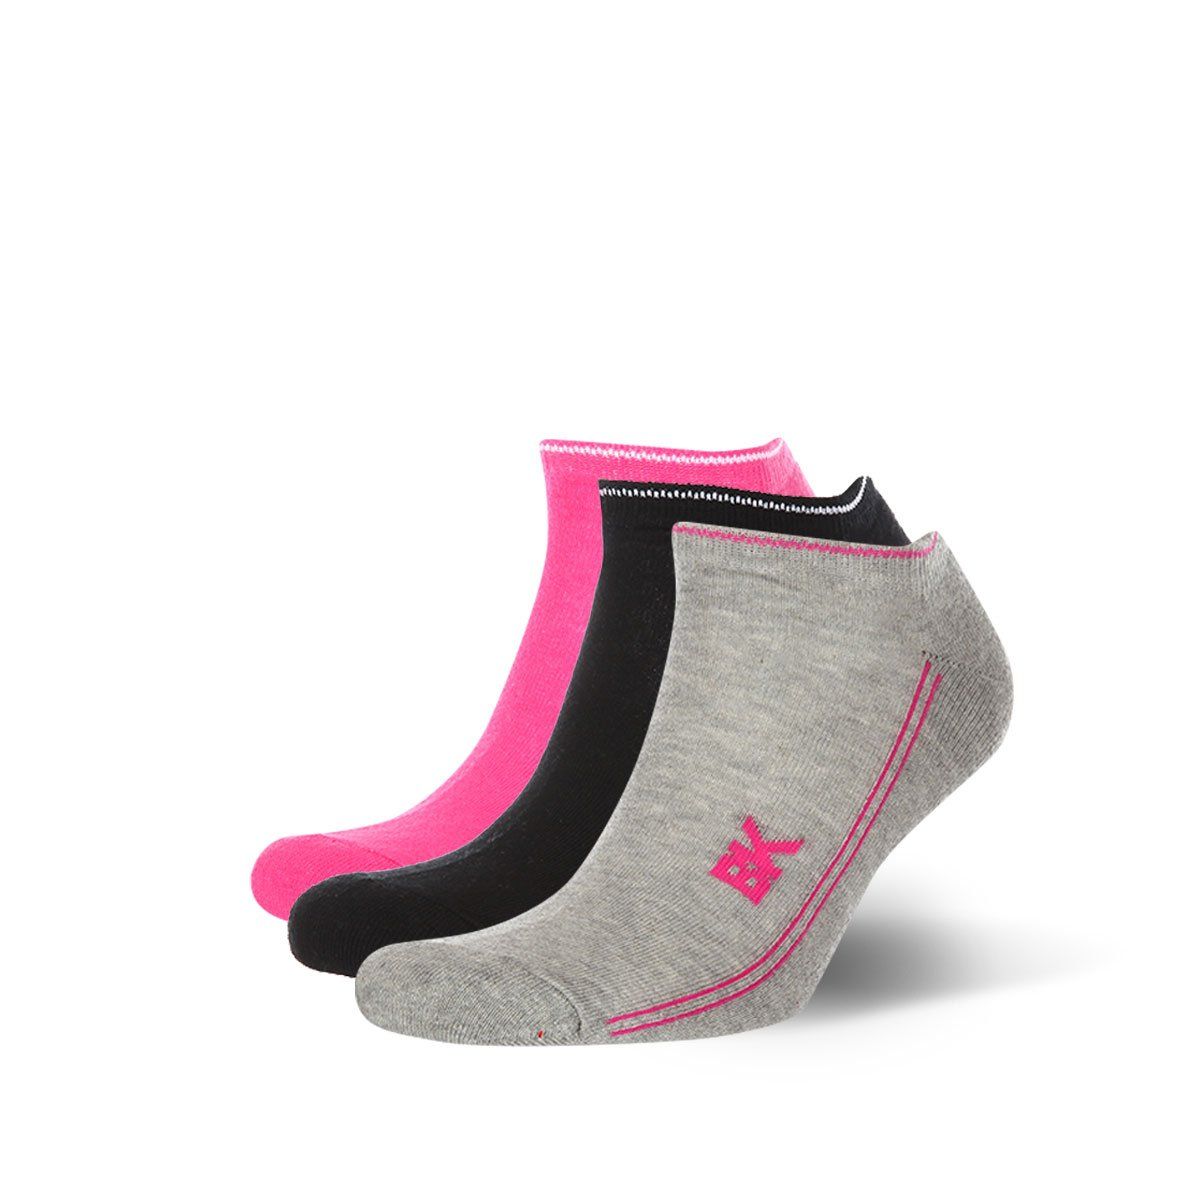 Носки BK sport sneaker socks ladies terry sole. В наборе 3 пары разного цвета.